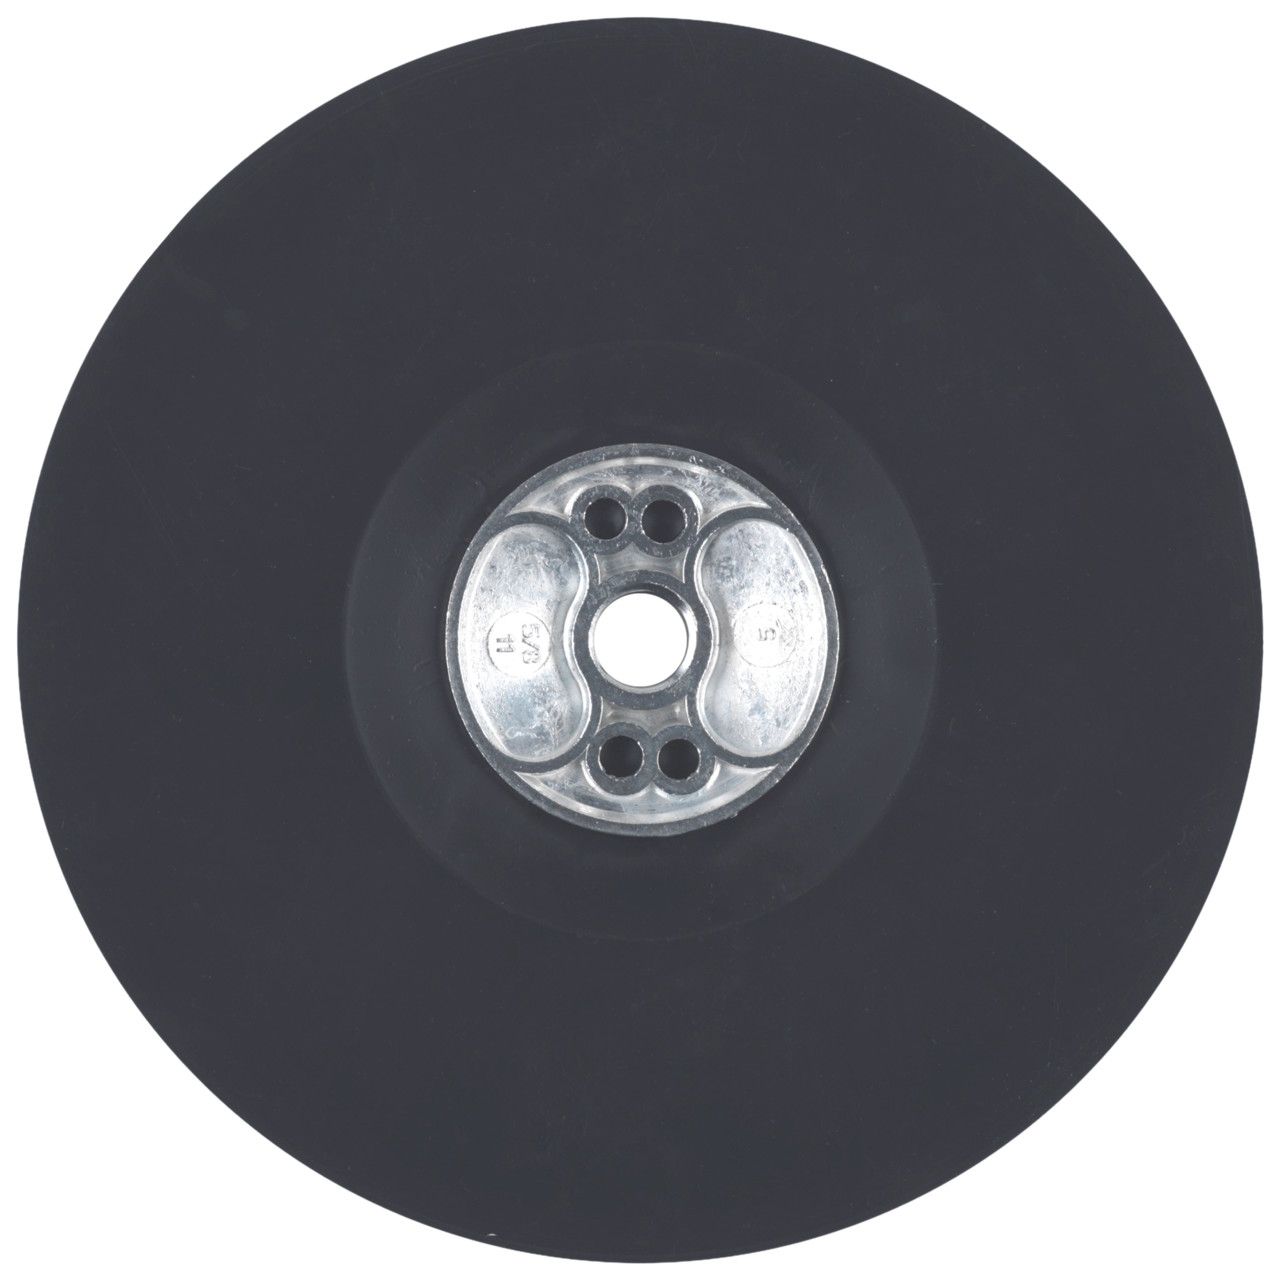 Tyrolit Accesorios para discos de fibra 180 x 22 #PAD FIBER 180x22 5/8 B HARD